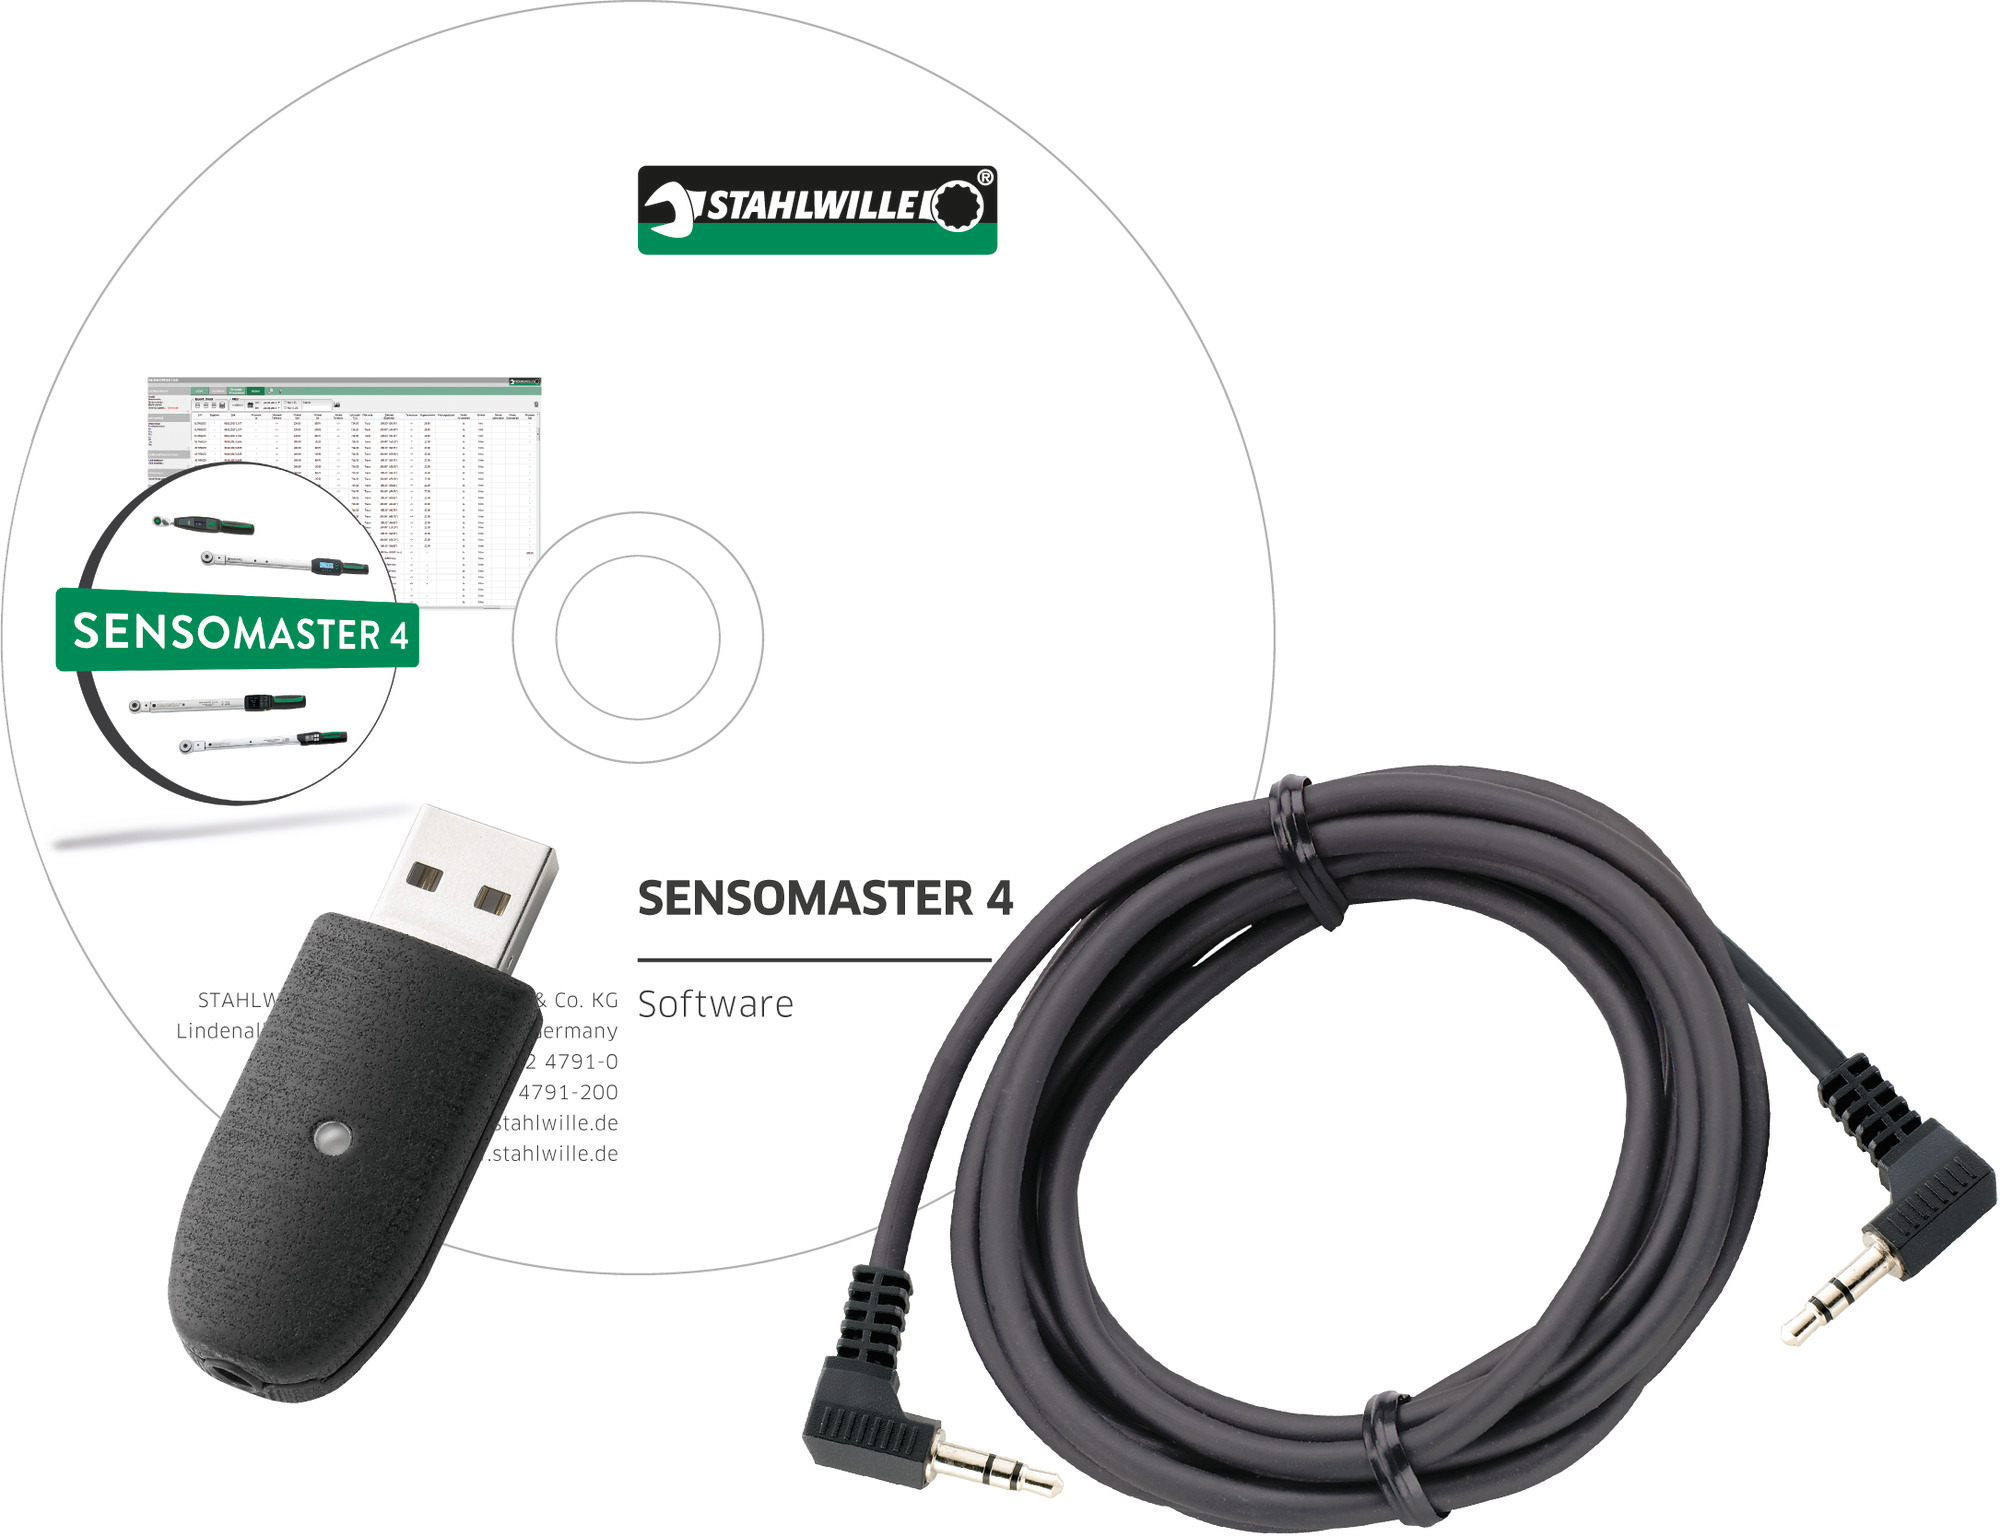 USB Hub, Jack Cable and SENSOMASTER 4 Software 7759-5